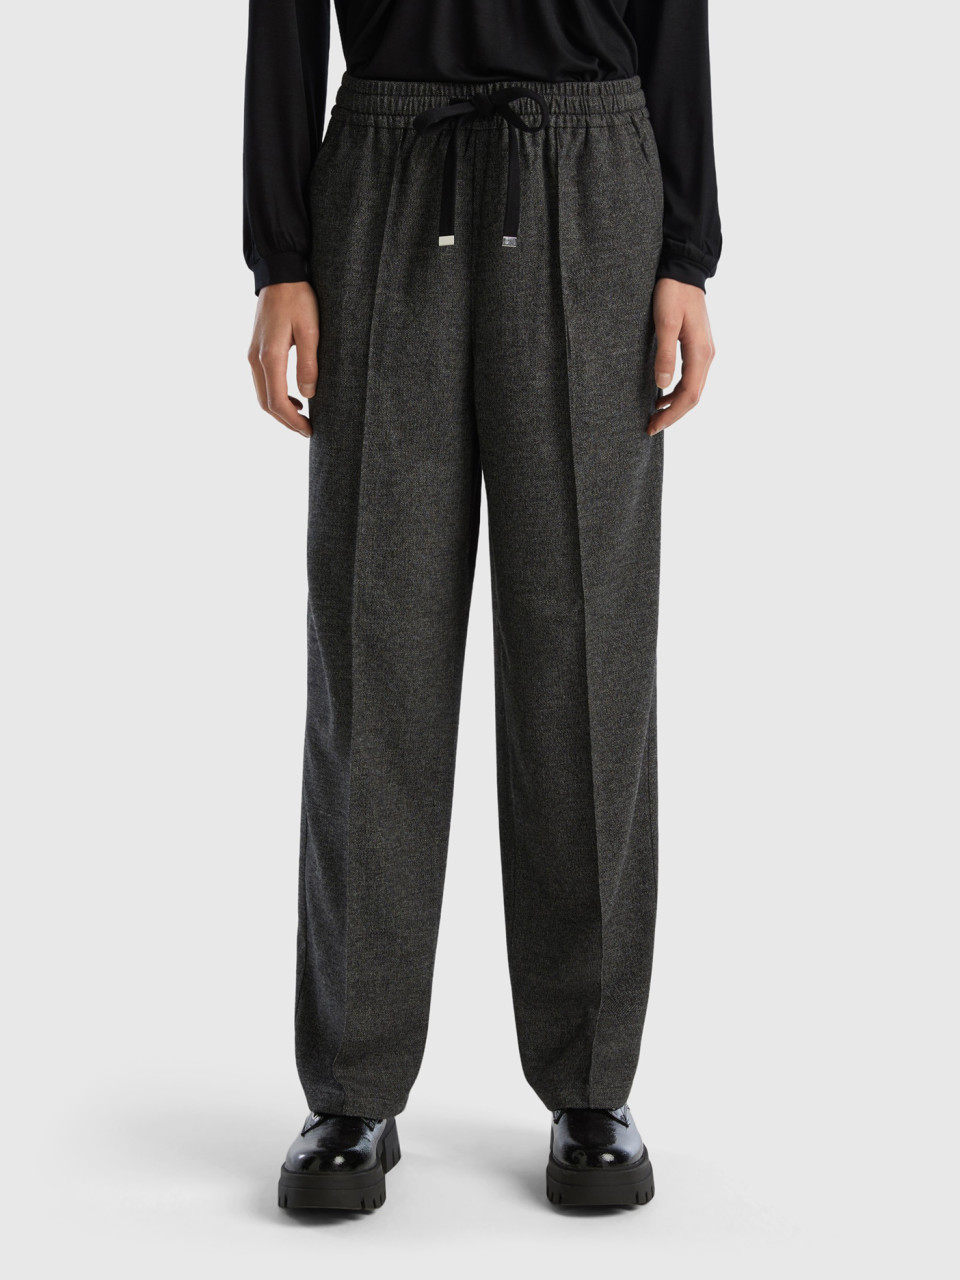 Benetton, Flannel Trousers With Drawstring, Dark Gray, Women